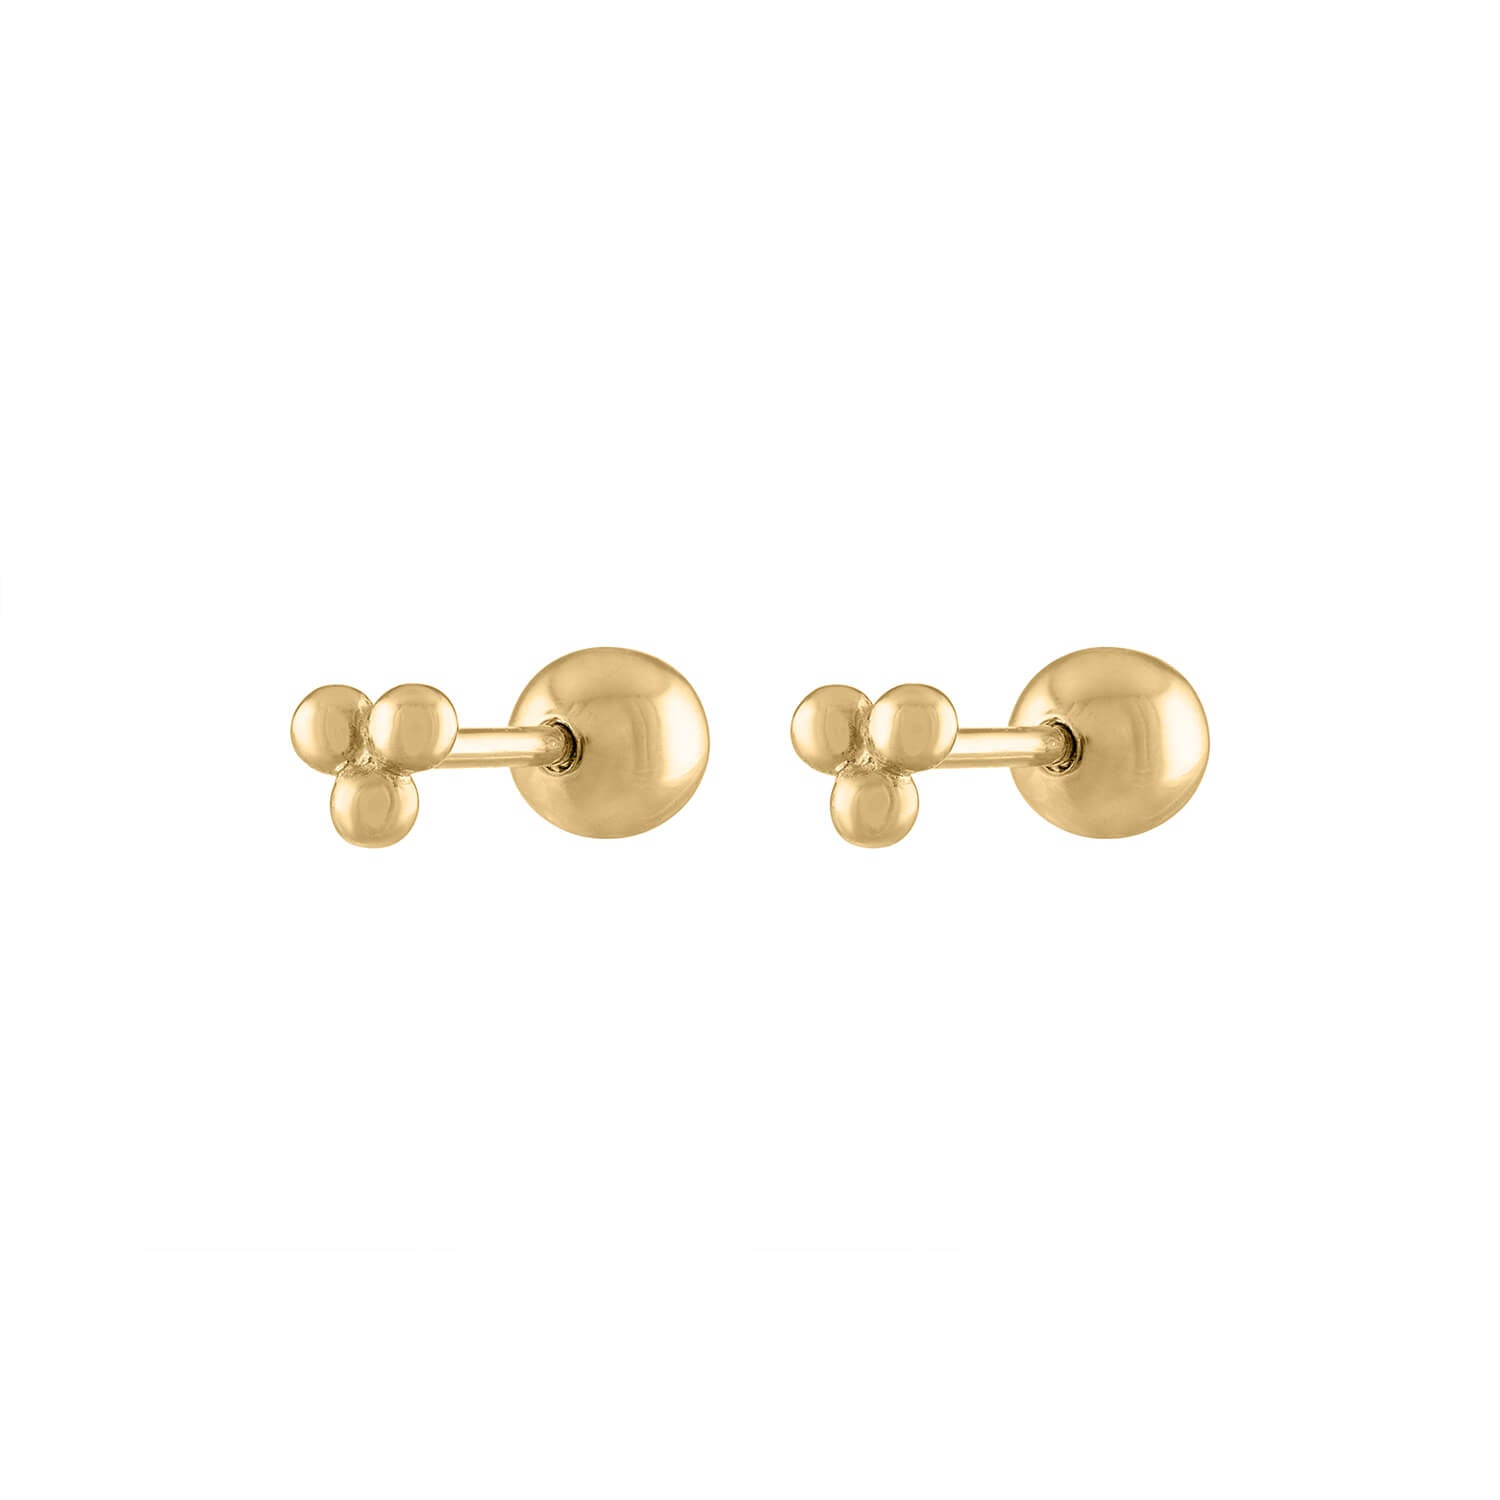 YOIHUR Locking Earring Backs for Studs,18k Gold Bullet India | Ubuy